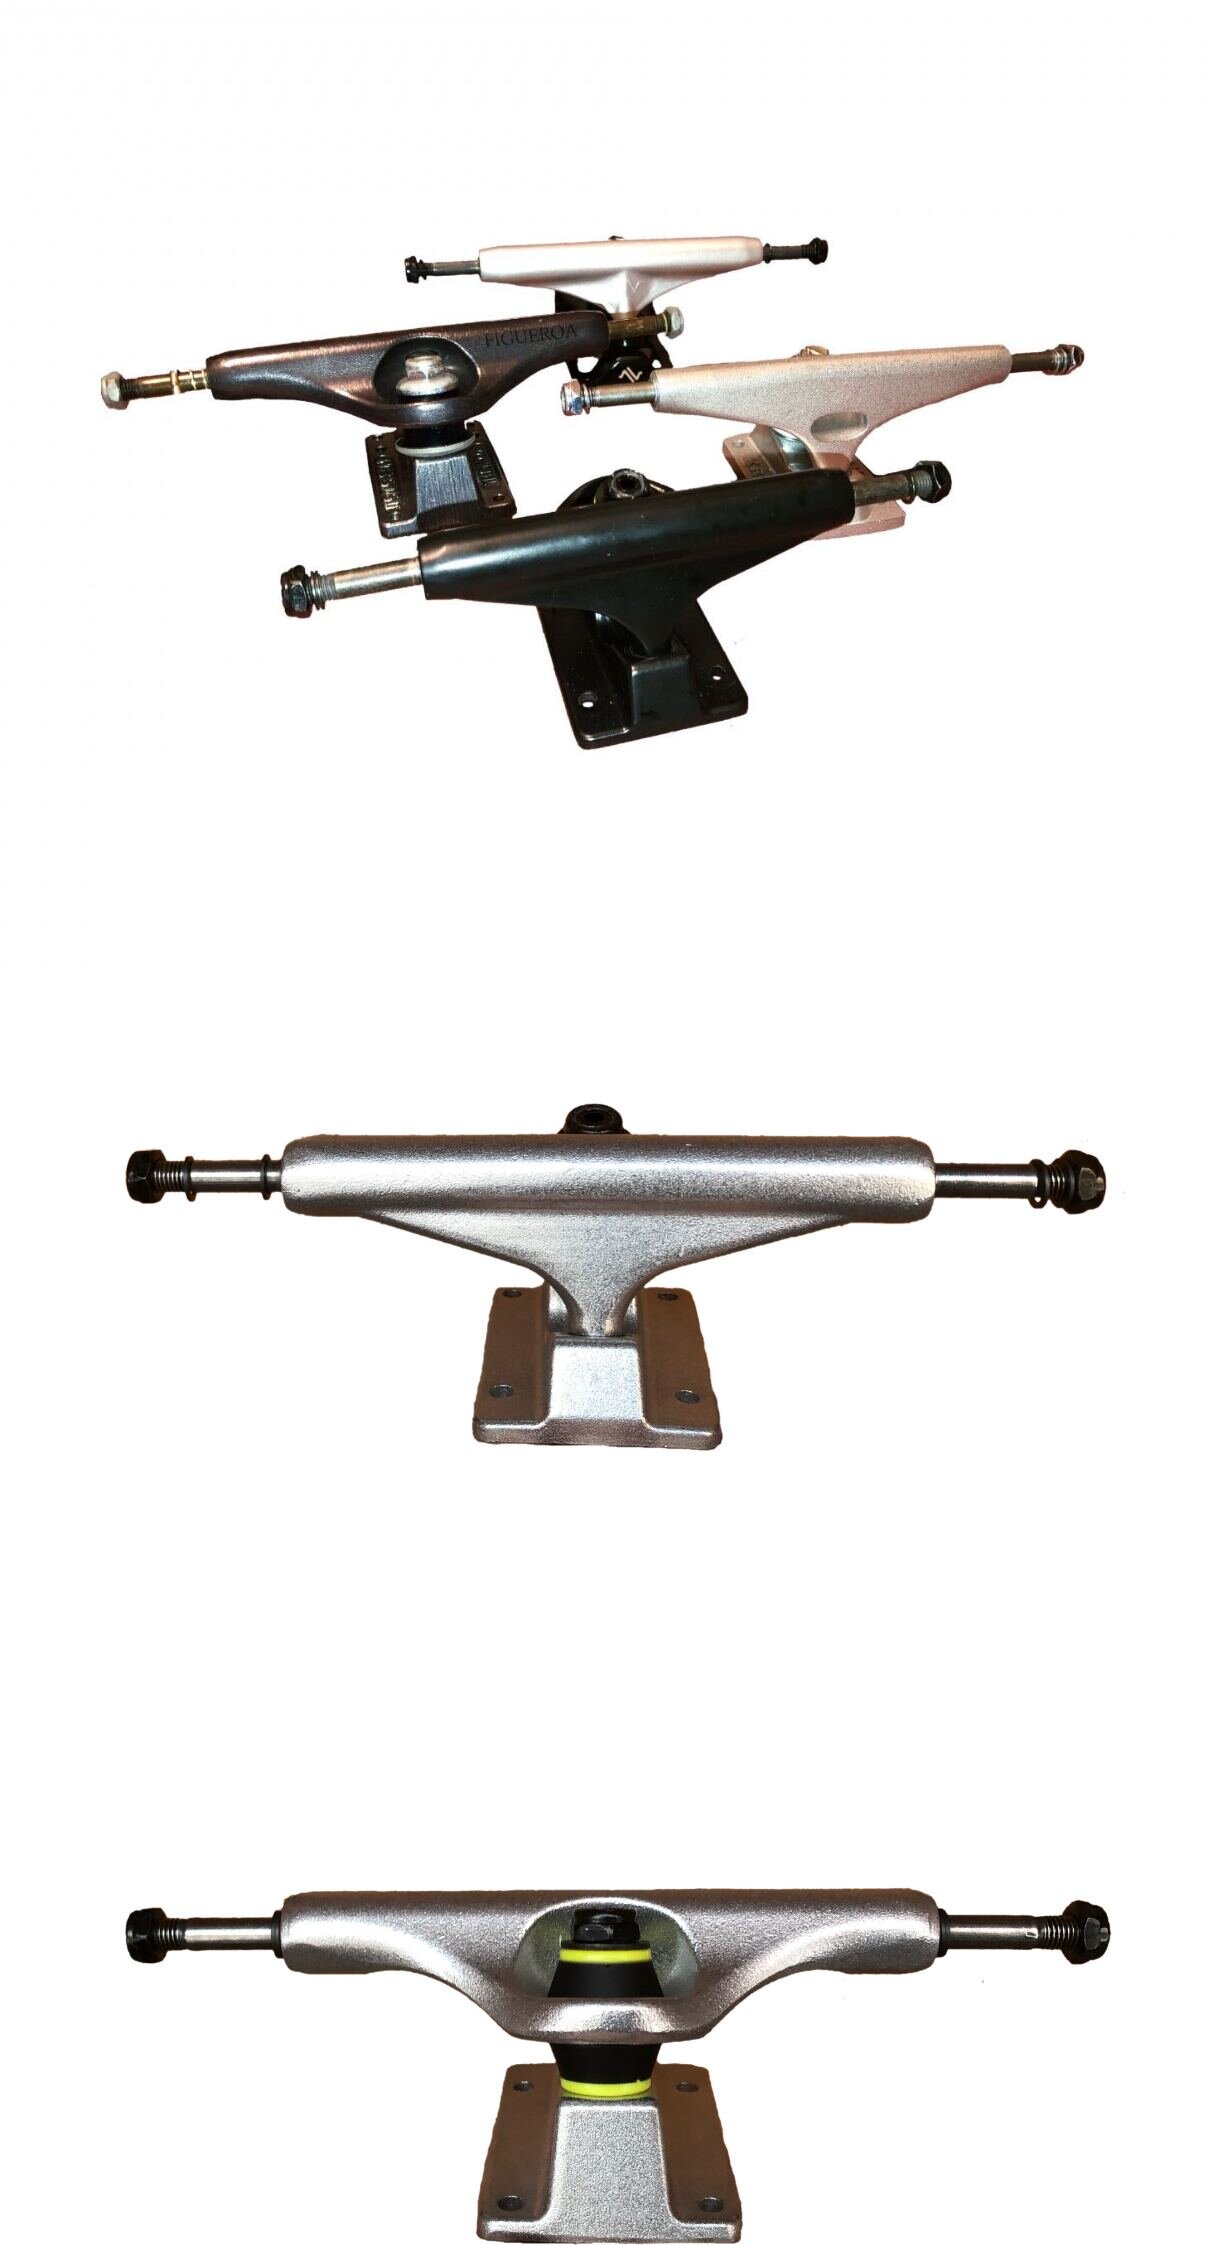 Illustration of different skateboard axles